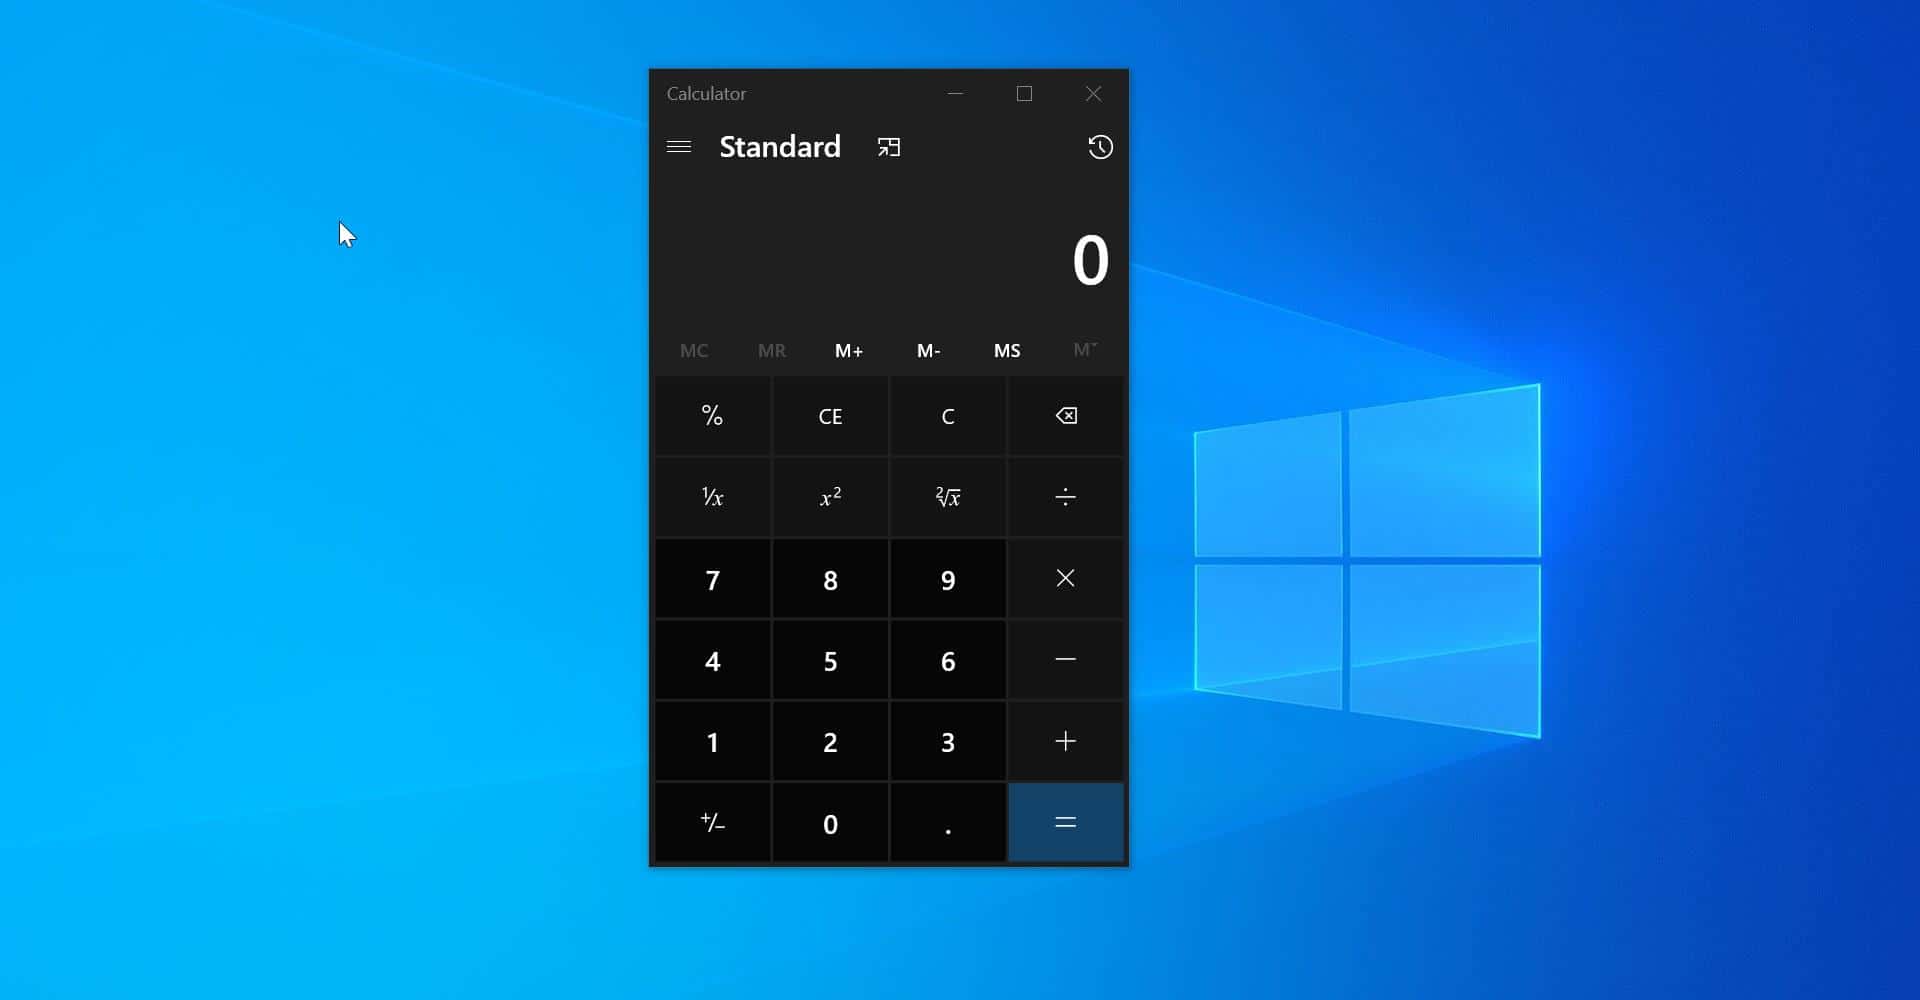 shortcut key for calculator in windows 8